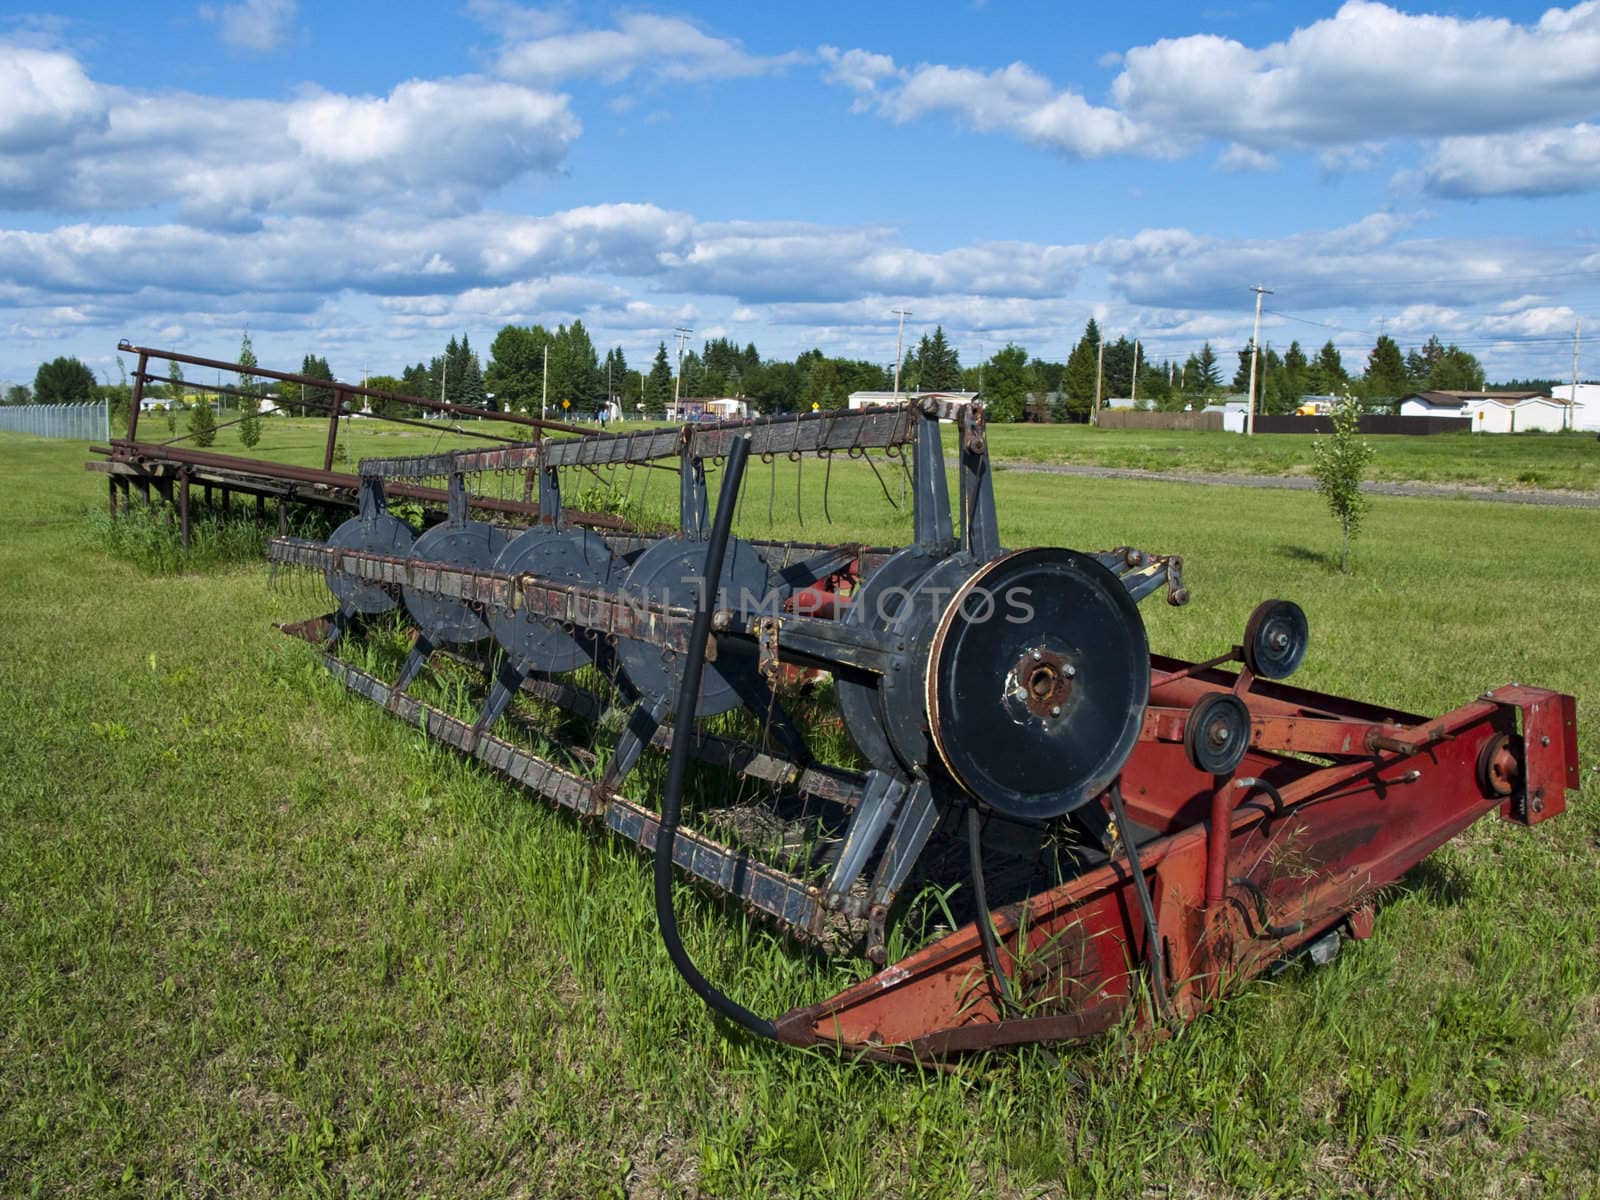 Antique Agriculture Machine by watamyr